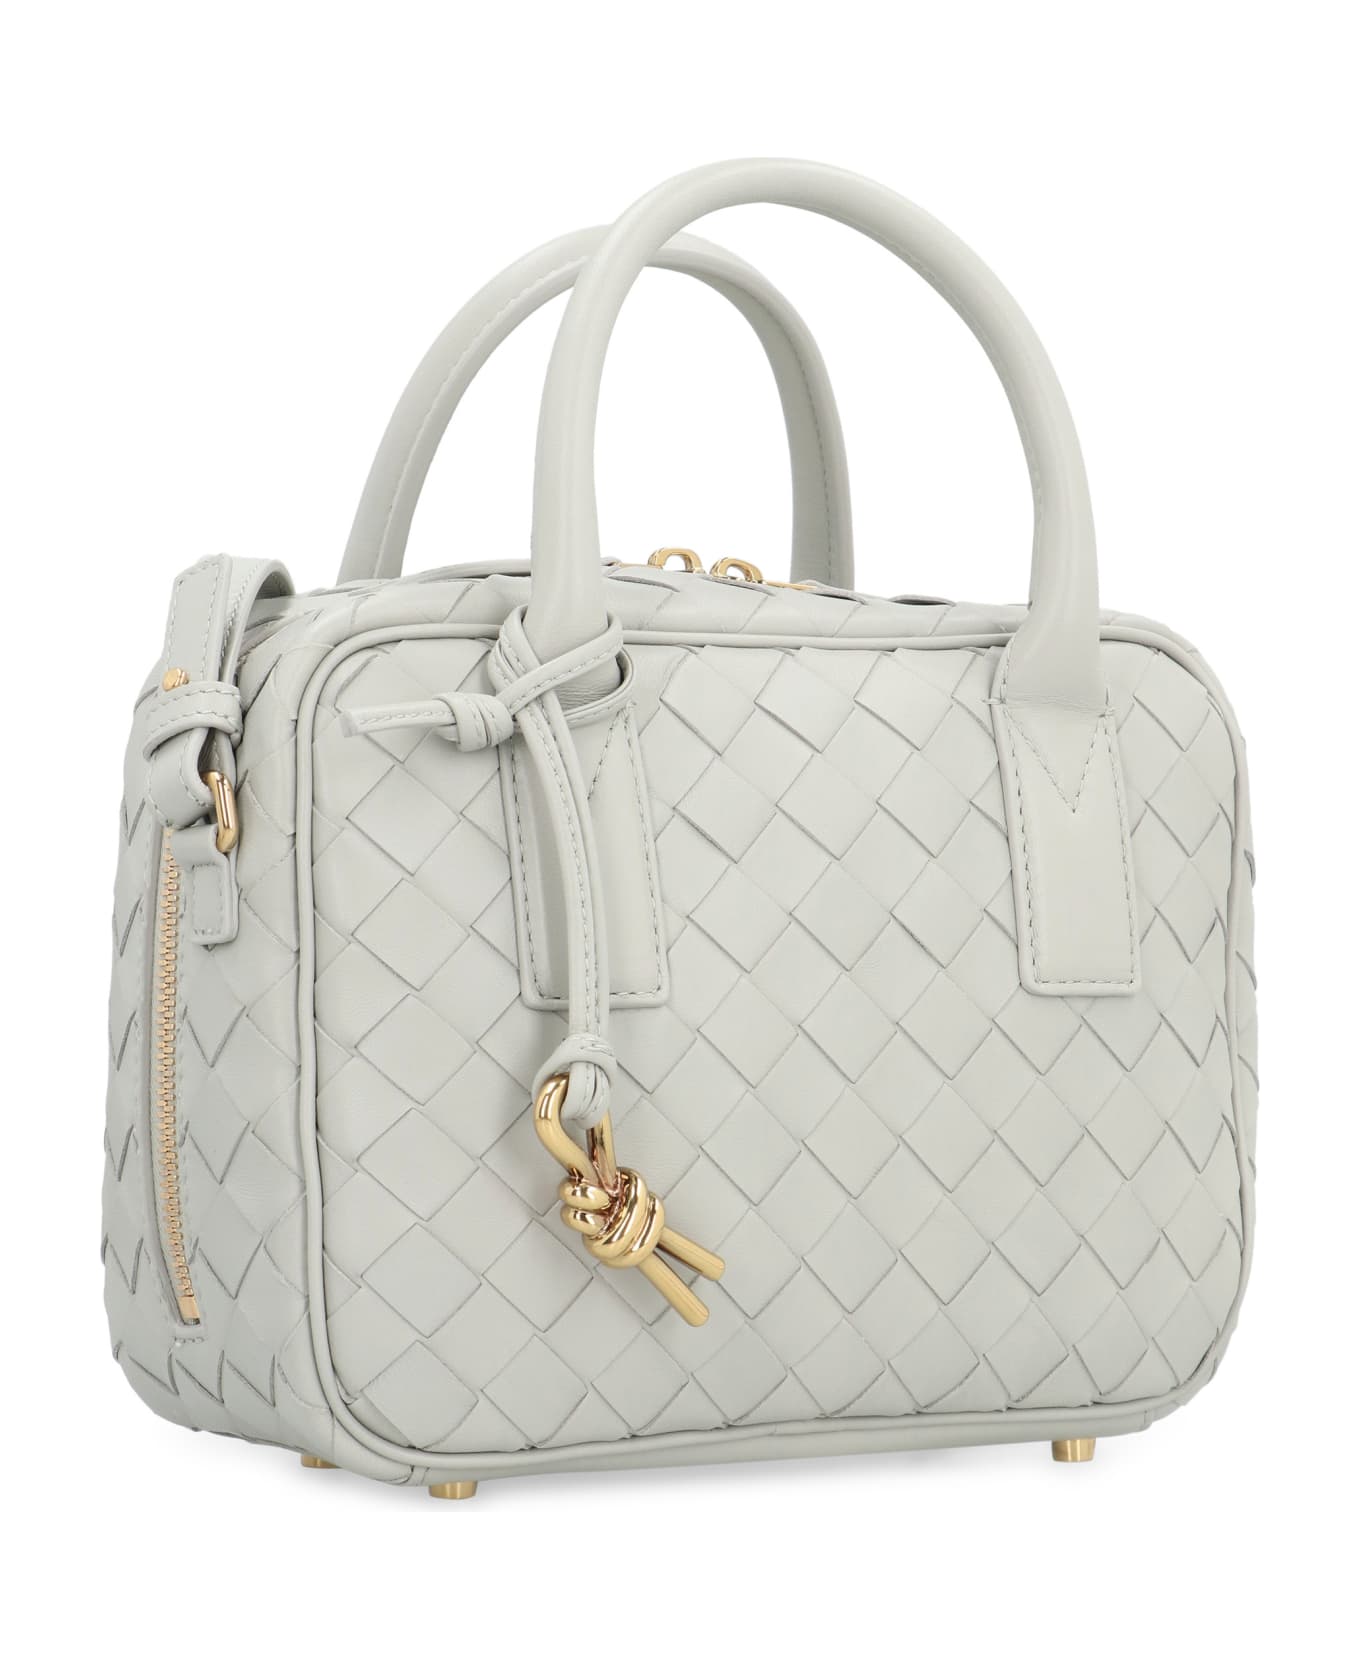 Bottega Veneta Getaway Leather Handbag - grey トートバッグ